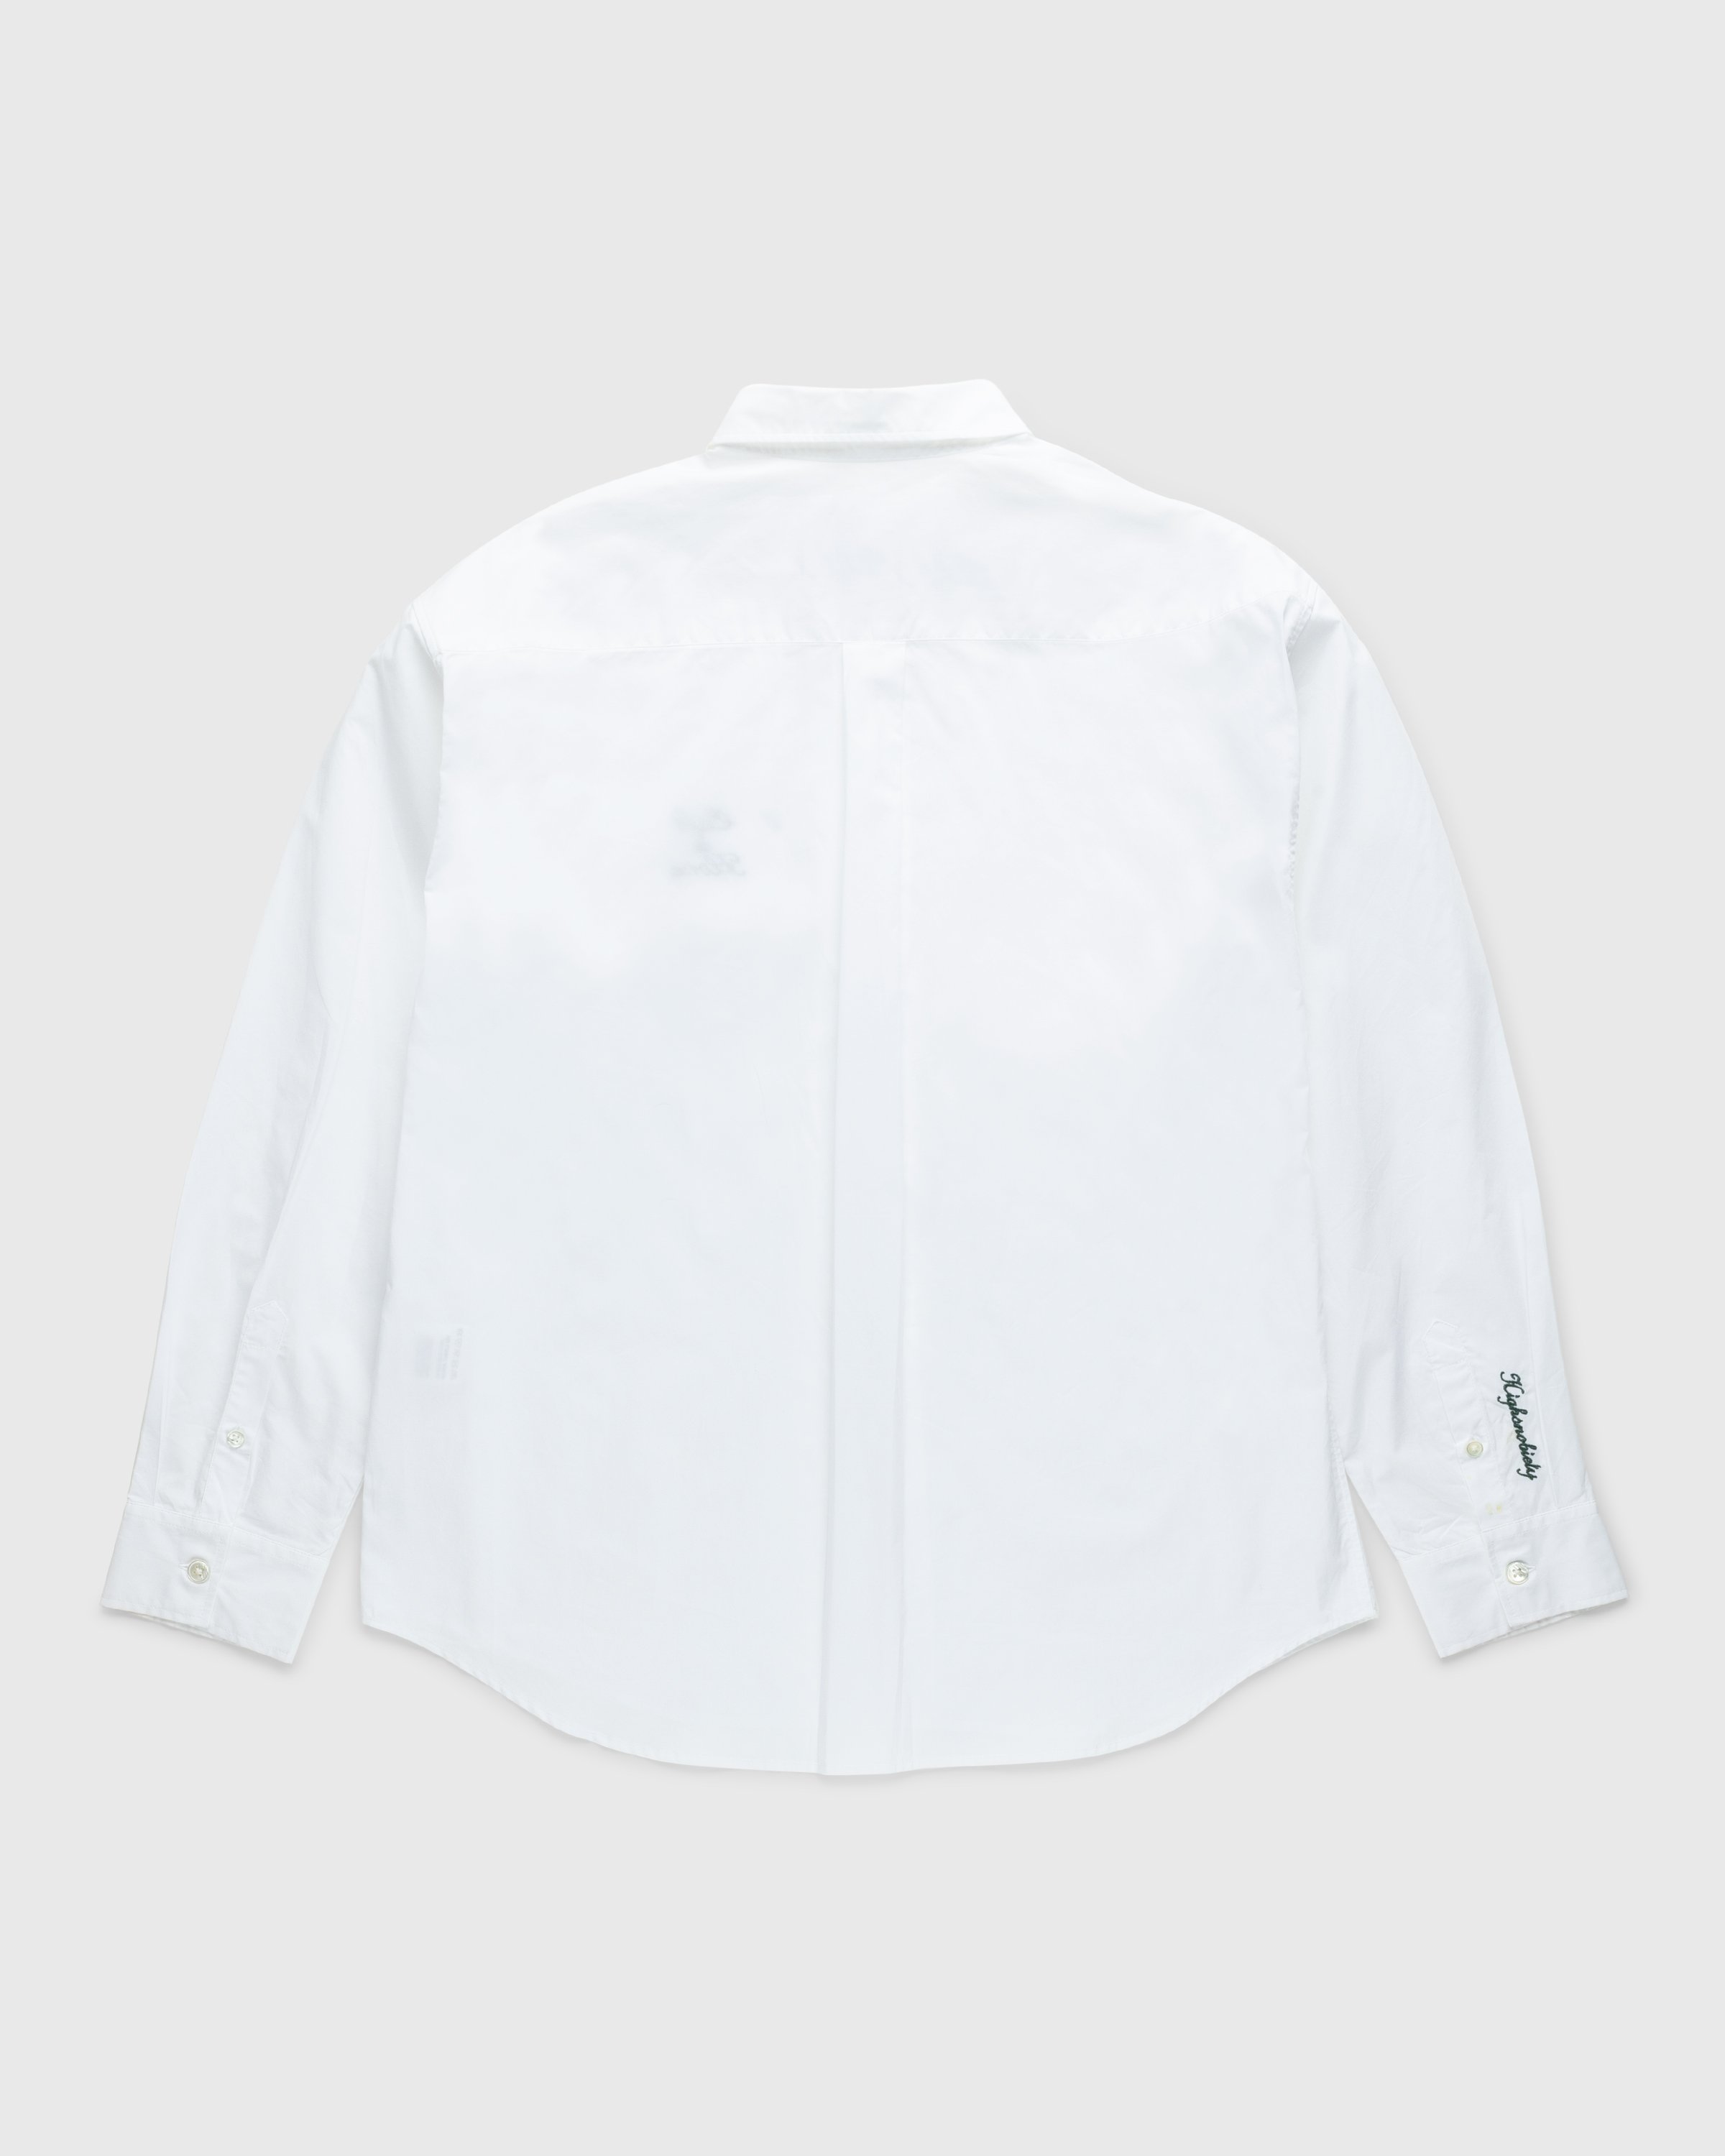 Café de Flore x Highsnobiety - Not In Paris 4 Poplin Shirt White - Clothing - White - Image 2